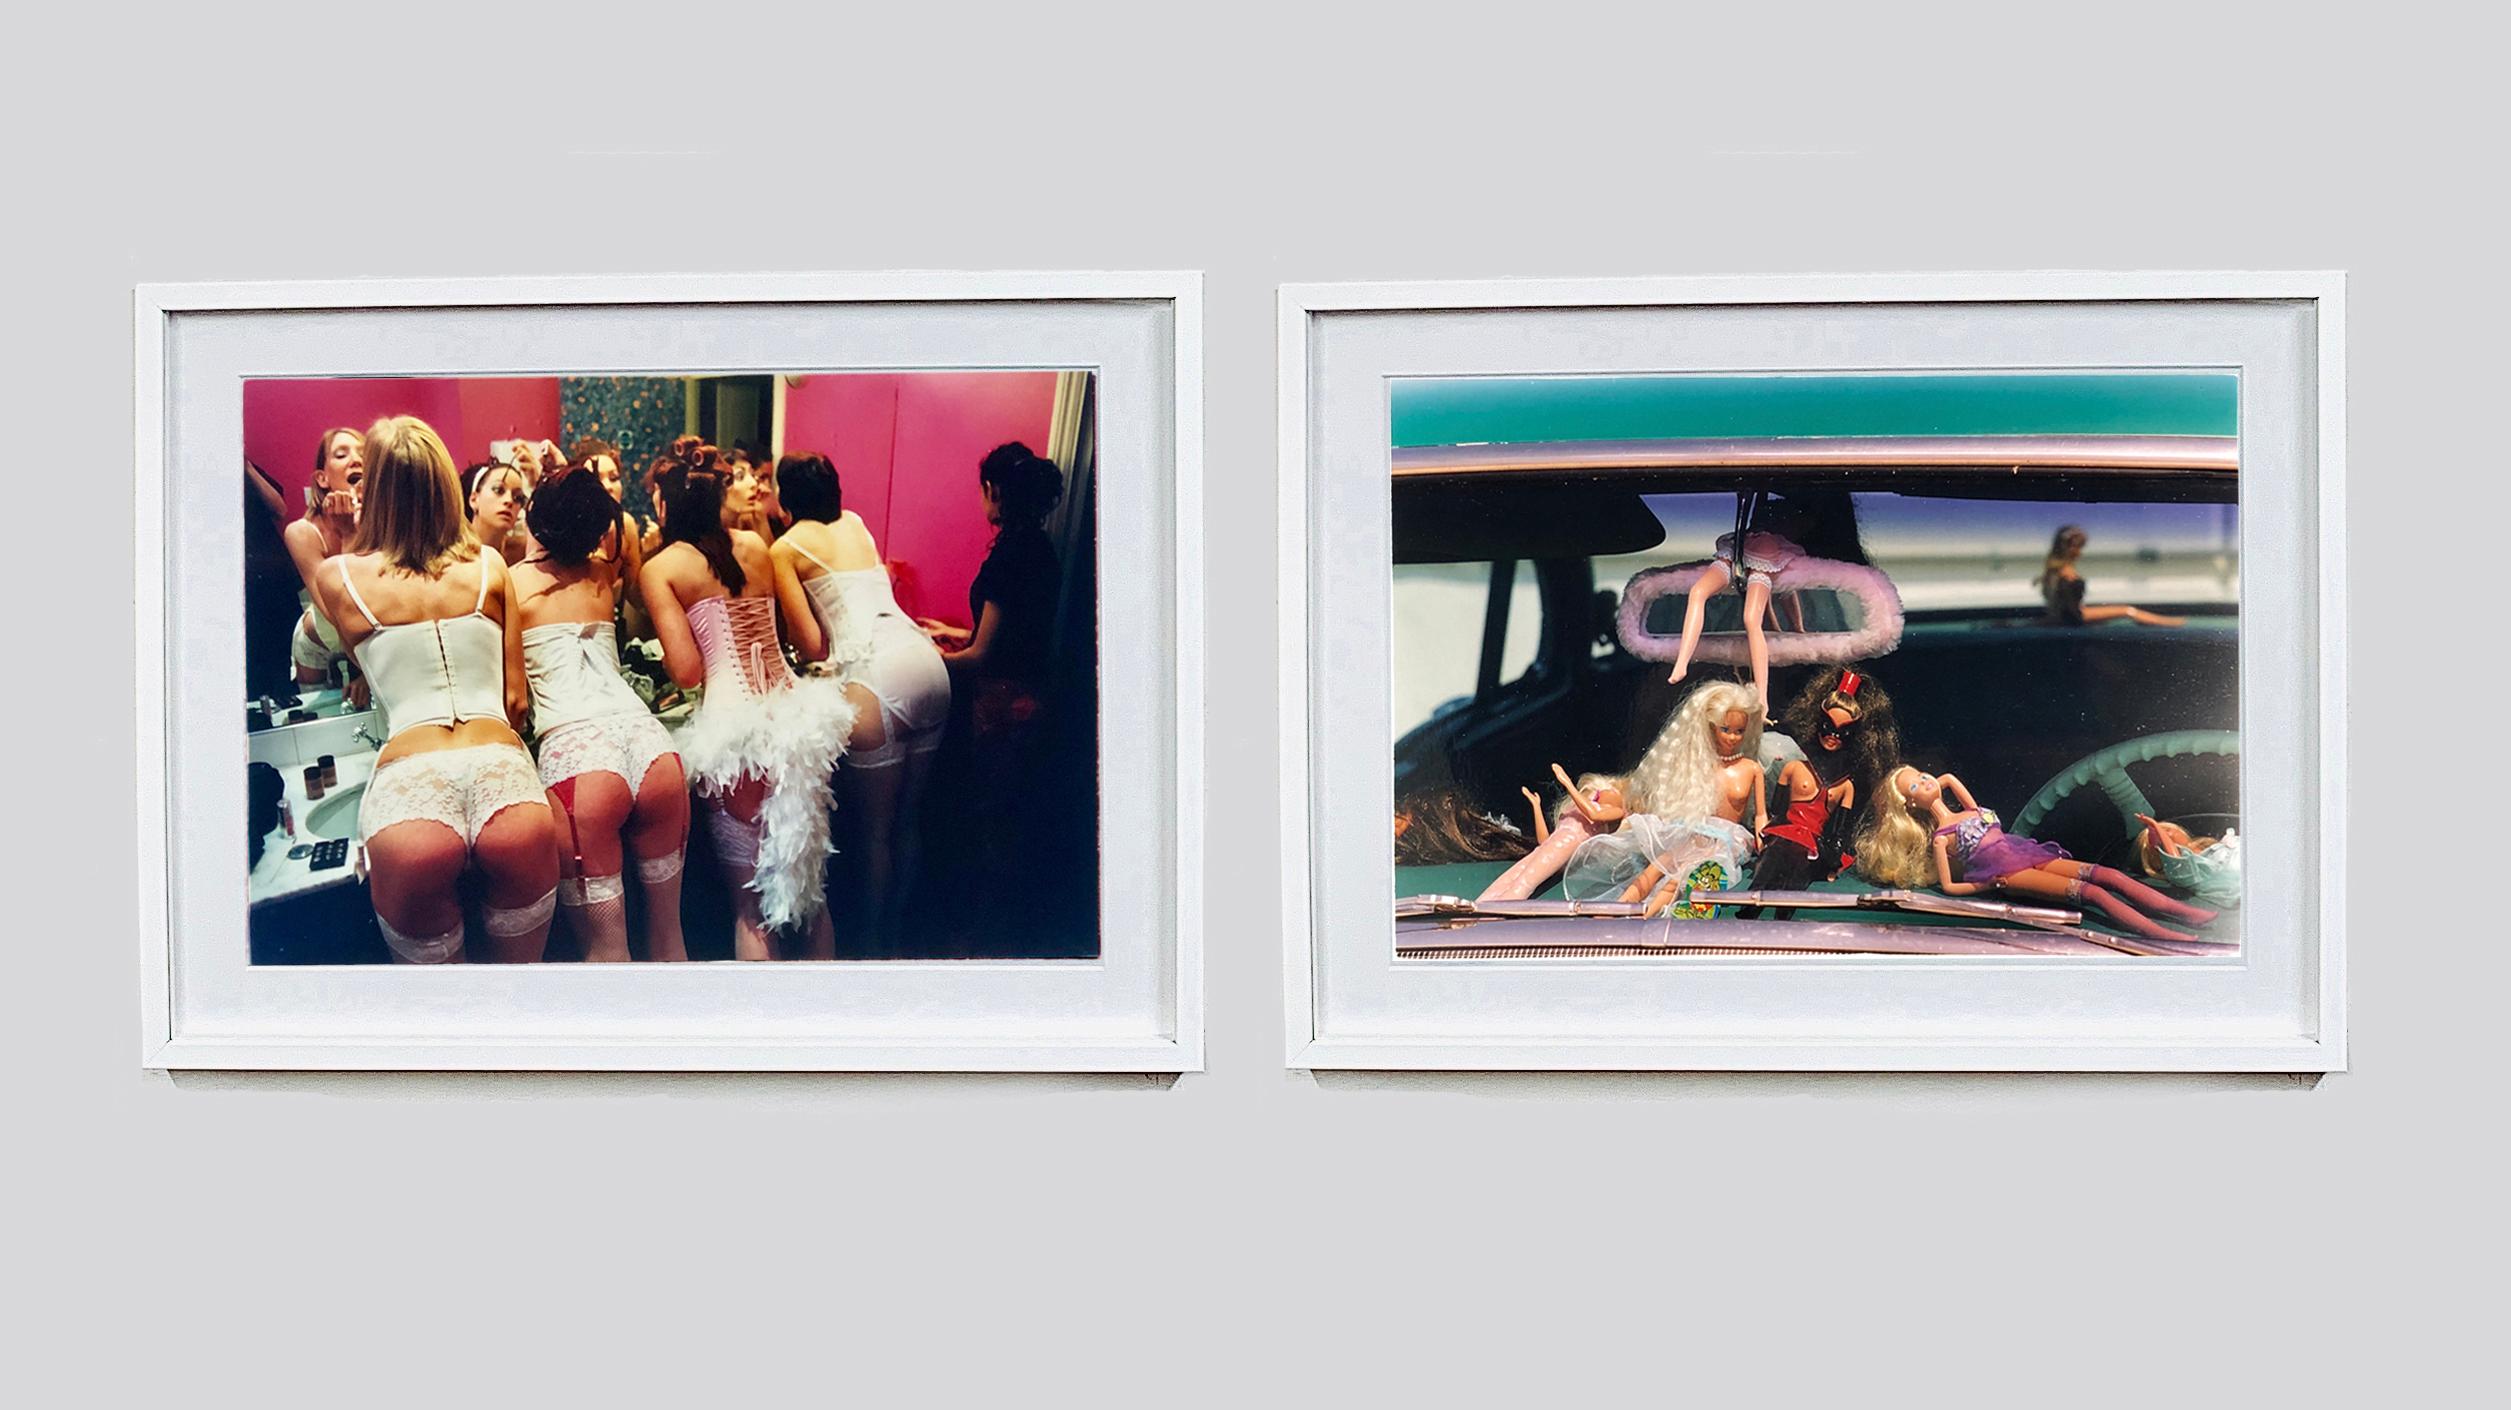 Belles of Shoreditch, The Whoopee Club, London – Burlesque-Farbfotografie (Pink), Portrait Photograph, von Richard Heeps